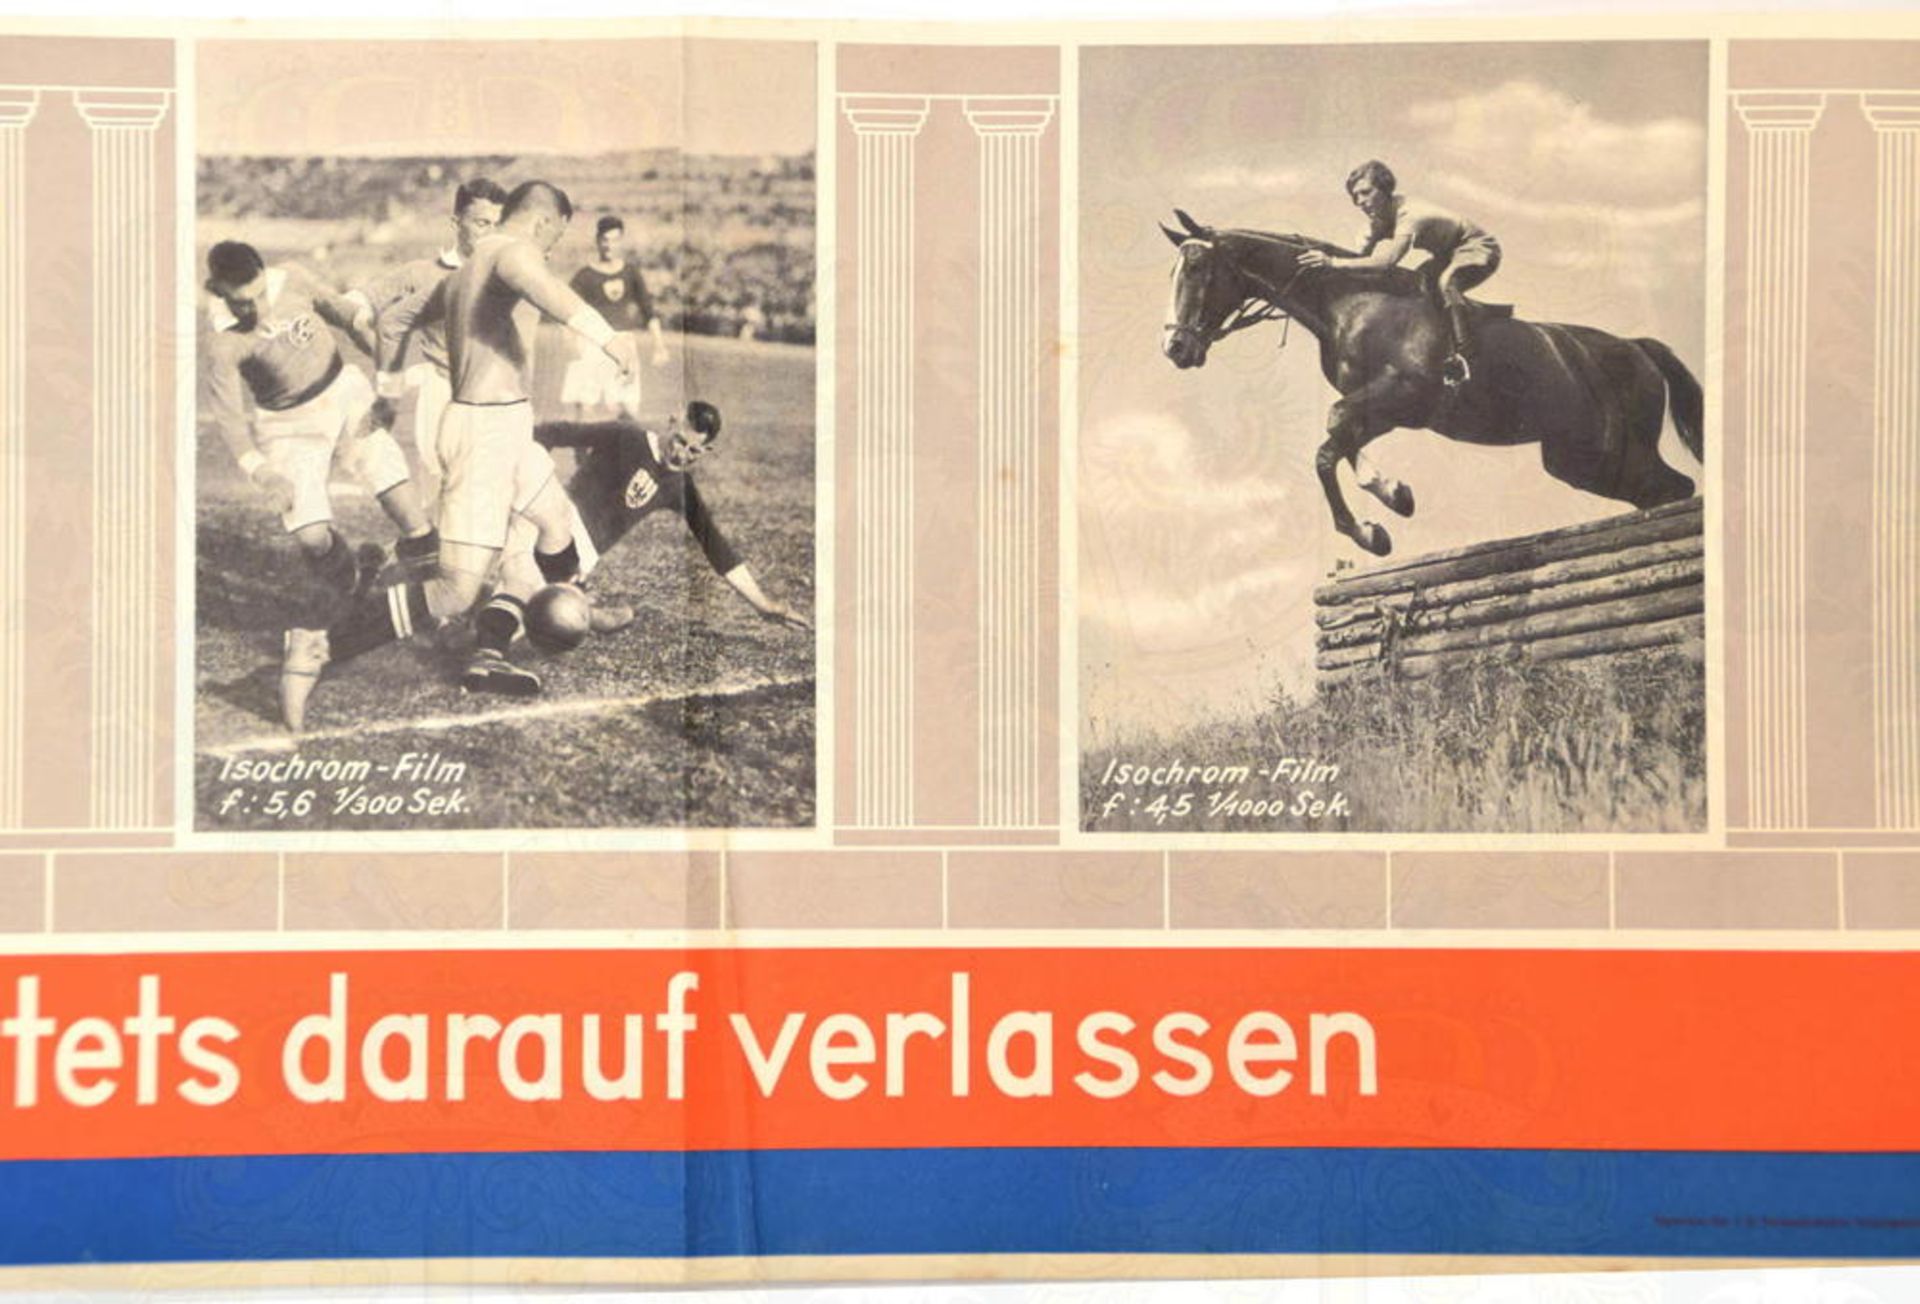 PLAKAT AGFA-SPORTSZENEN, m. 6 Sportszenen, 119x26,8cm, 2 Enden gefaltet, um 1936 - Bild 2 aus 2